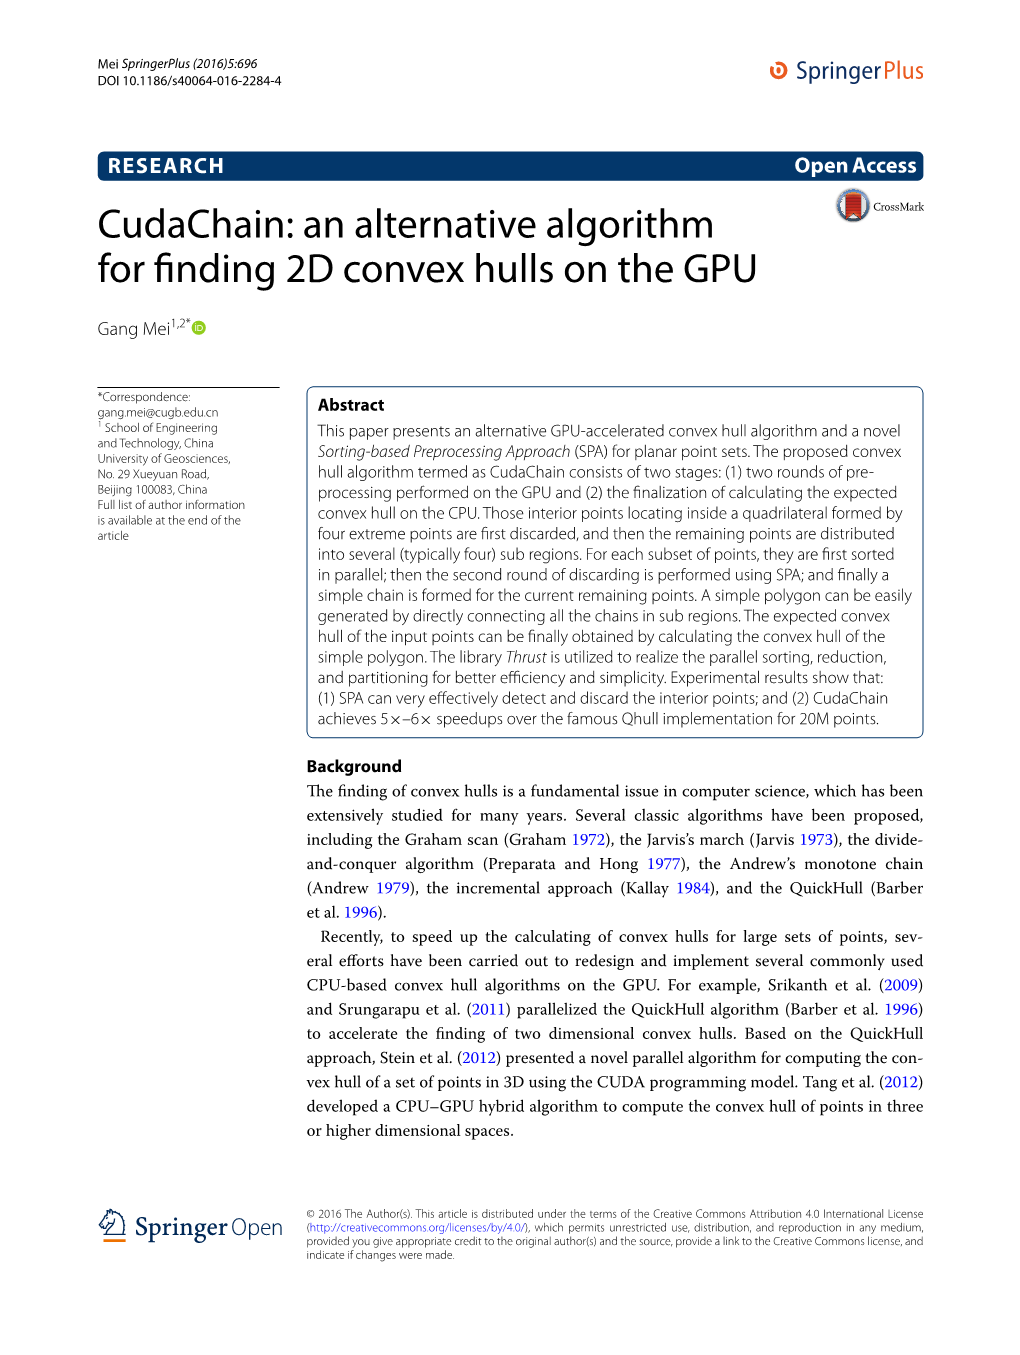 Cudachain: an Alternative Algorithm for Finding 2D Convex Hulls on the GPU